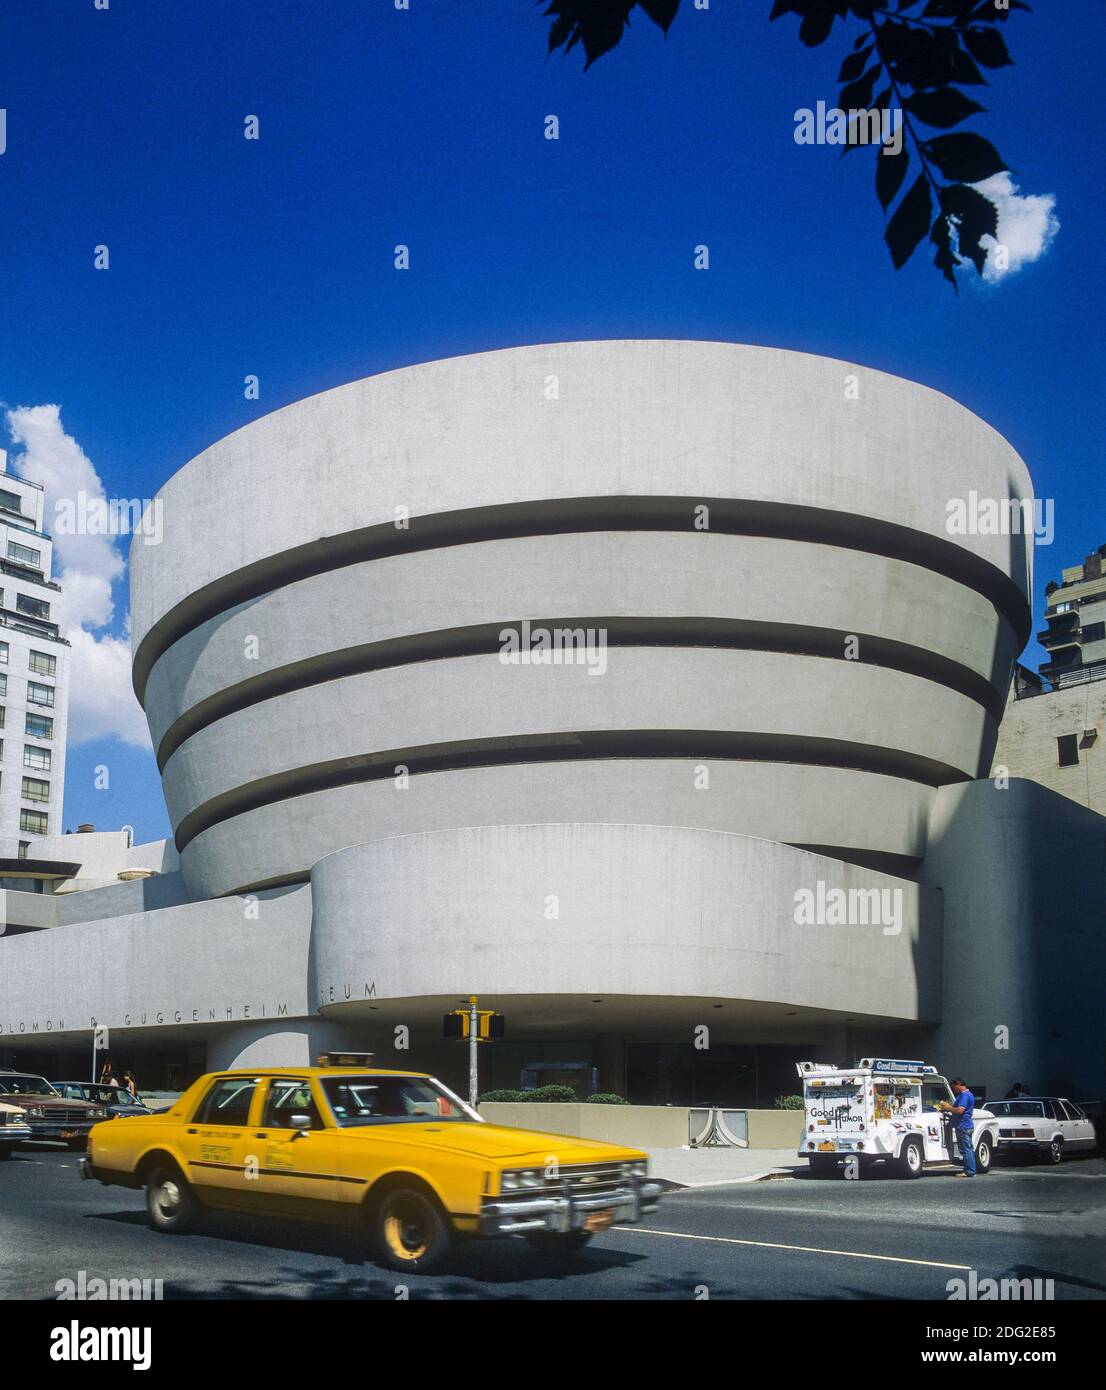 New York 1985, Solomon R. Guggenheim museum, yellow taxi, 5th Avenue, Upper East side, Manhattan, New York City, NY, NYC, USA, Stock Photo